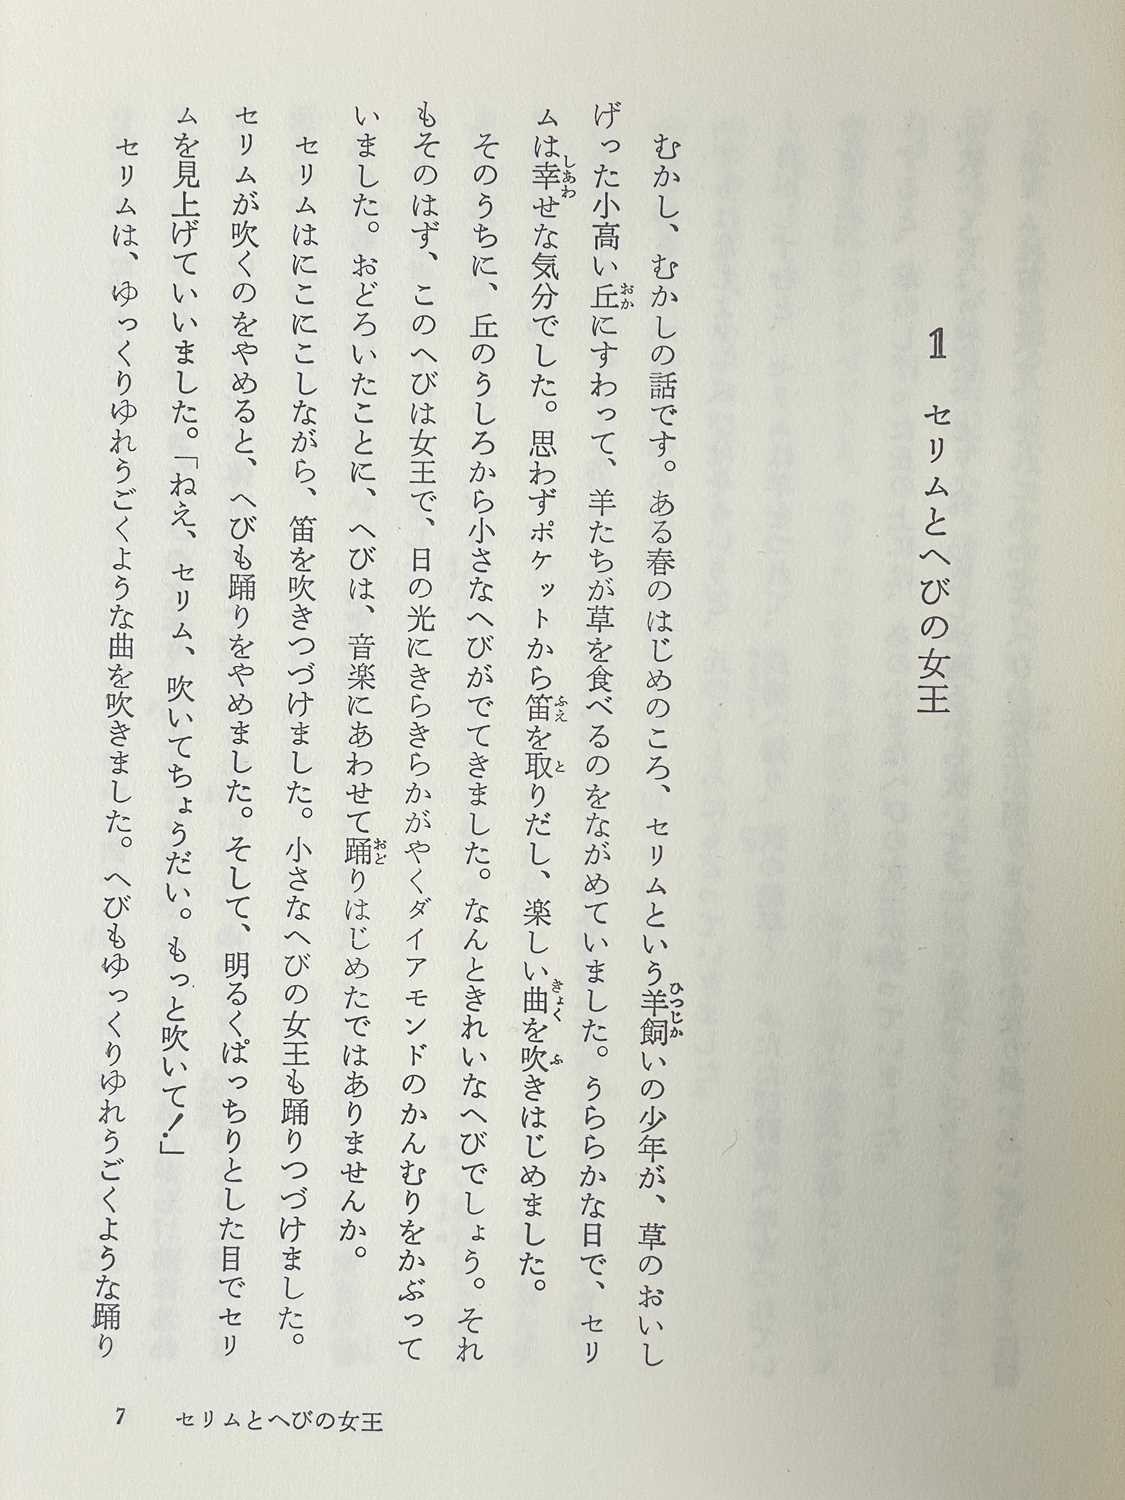 MANNING-SANDERS, Ruth. Japanese translations translated by Keisuke Nishimoto - Image 9 of 10